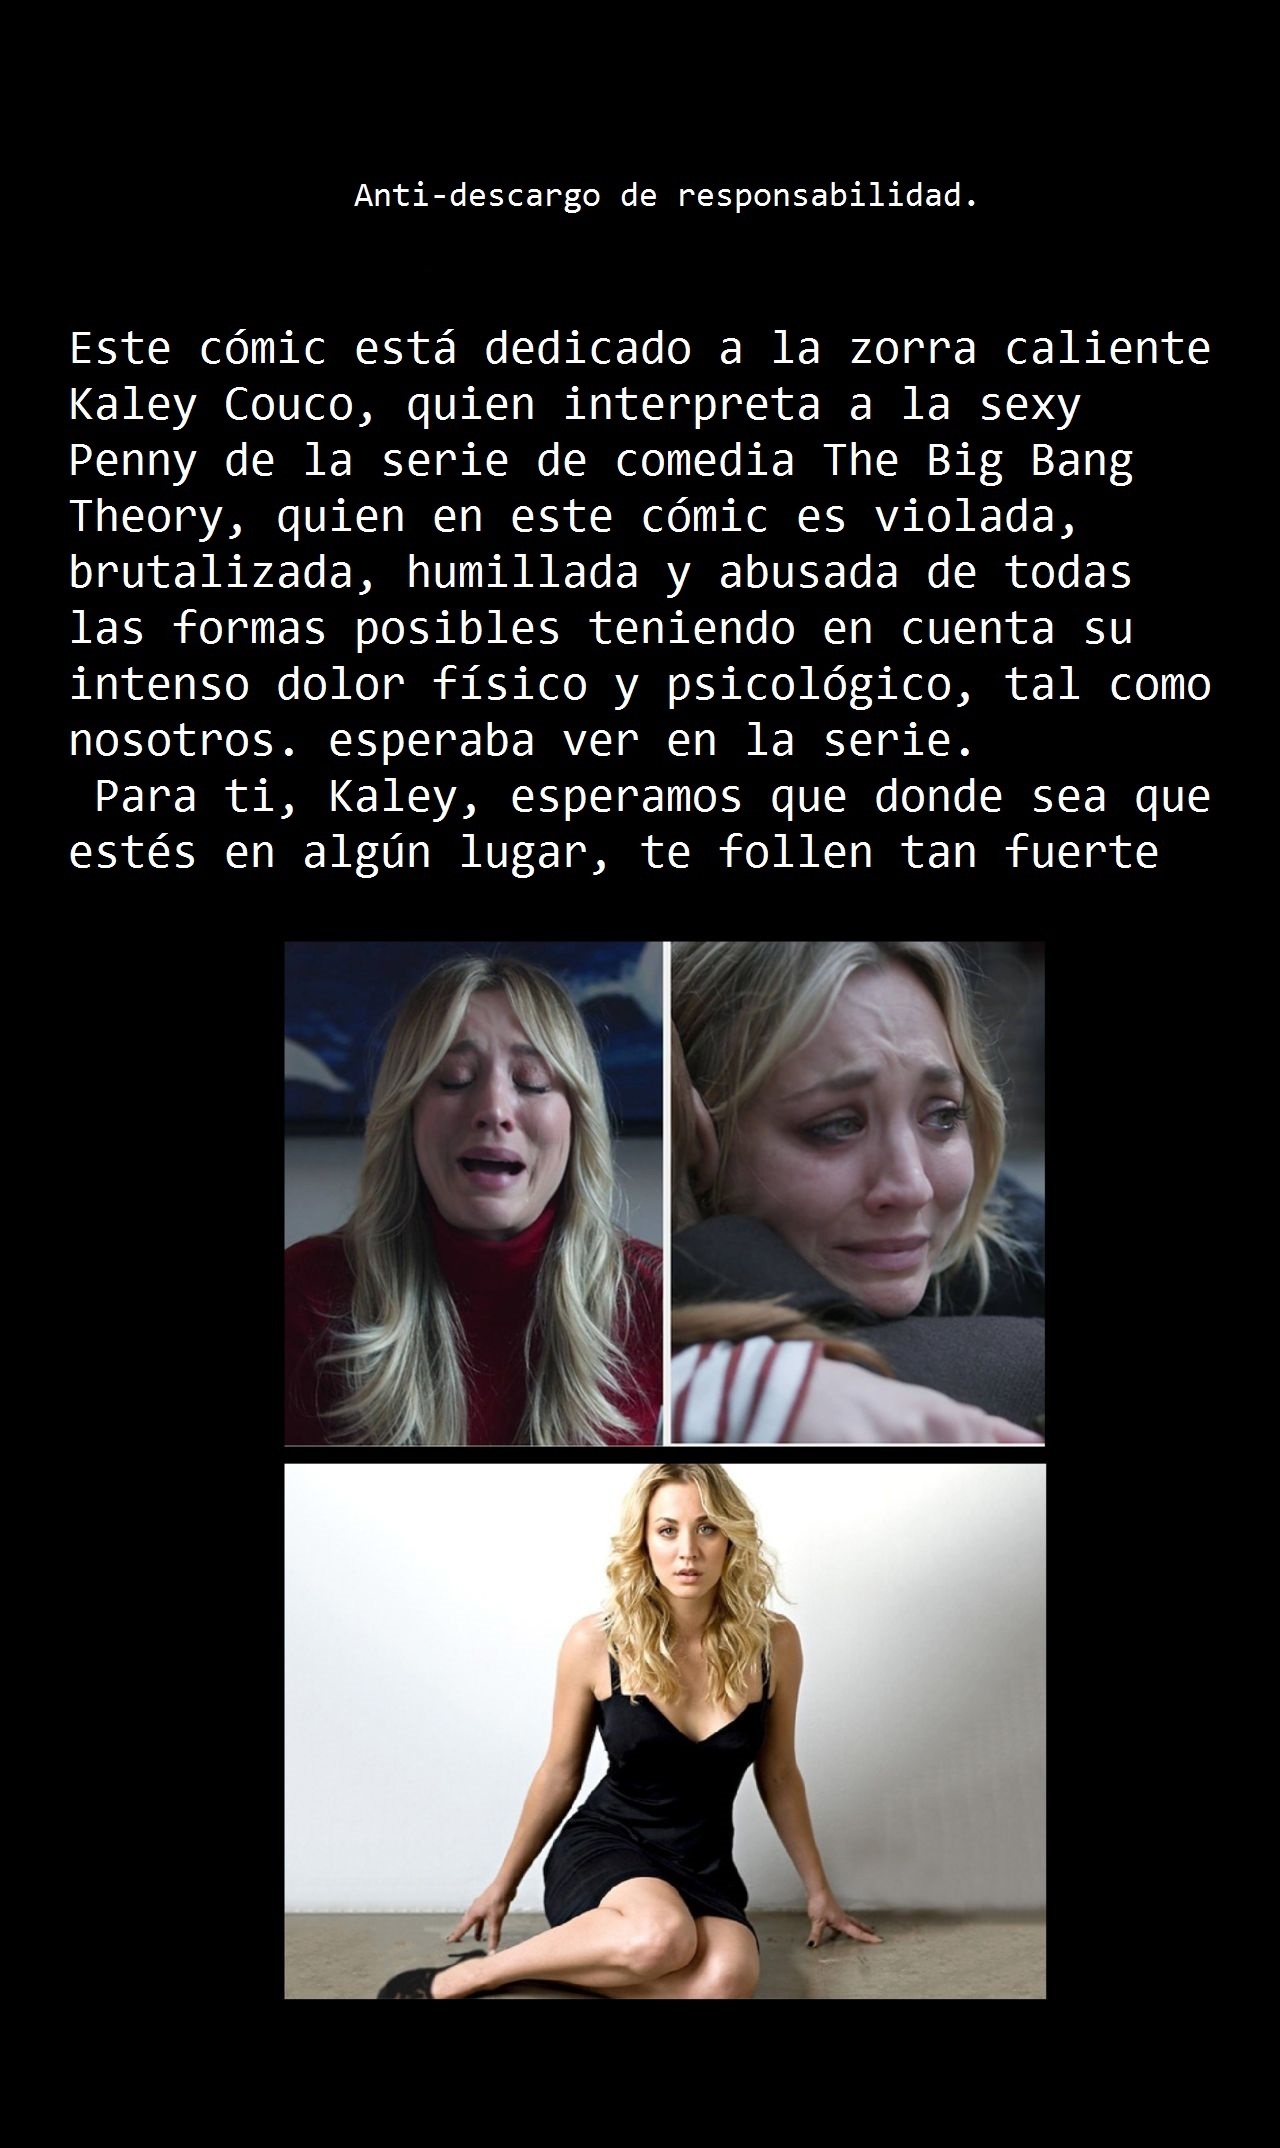 [RRapes] The Gang Bang Theory - Penny´s Rape -Volume 1 [Spanish]